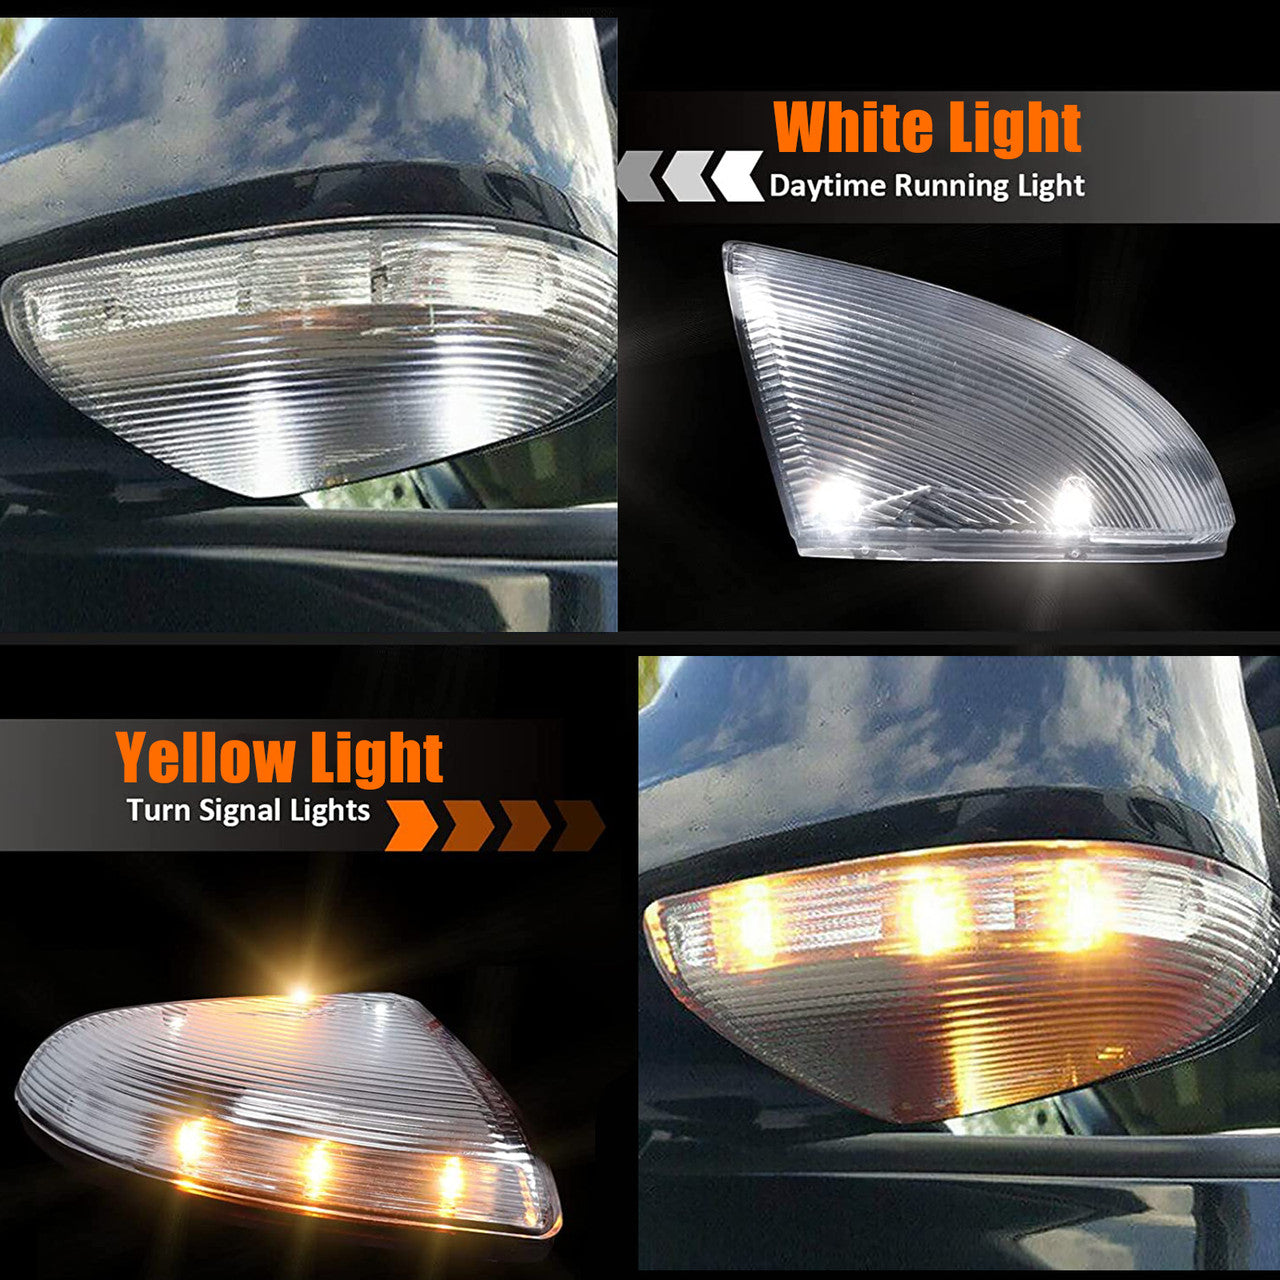 LED Left Side Mirror Turn Signal Lamp - For Dodge RAM 1500 2009-2018, 2500 2010-2018